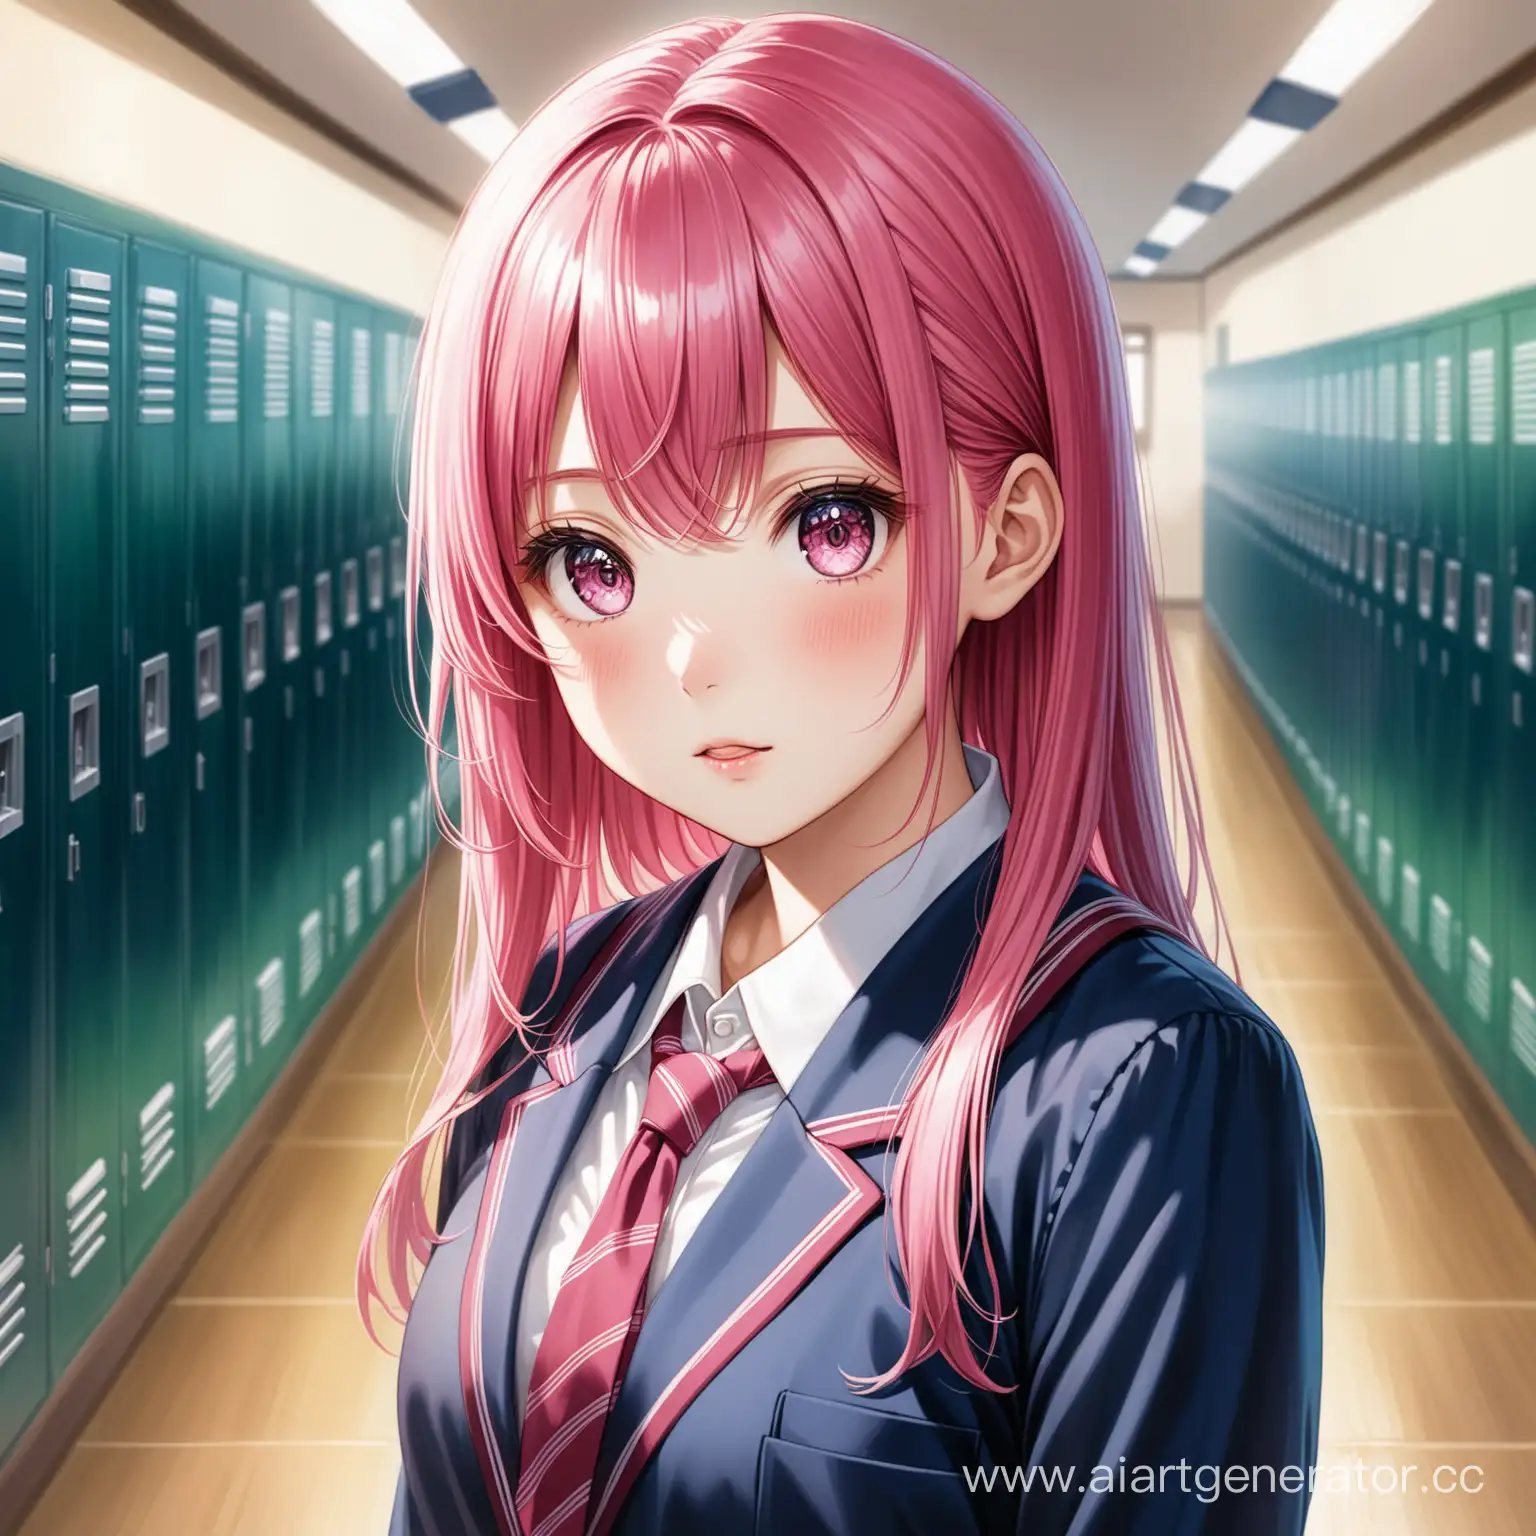 Realistic-Anime-Girl-Portrait-Vibrant-PinkHaired-Schoolgirl-in-Traditional-Uniform